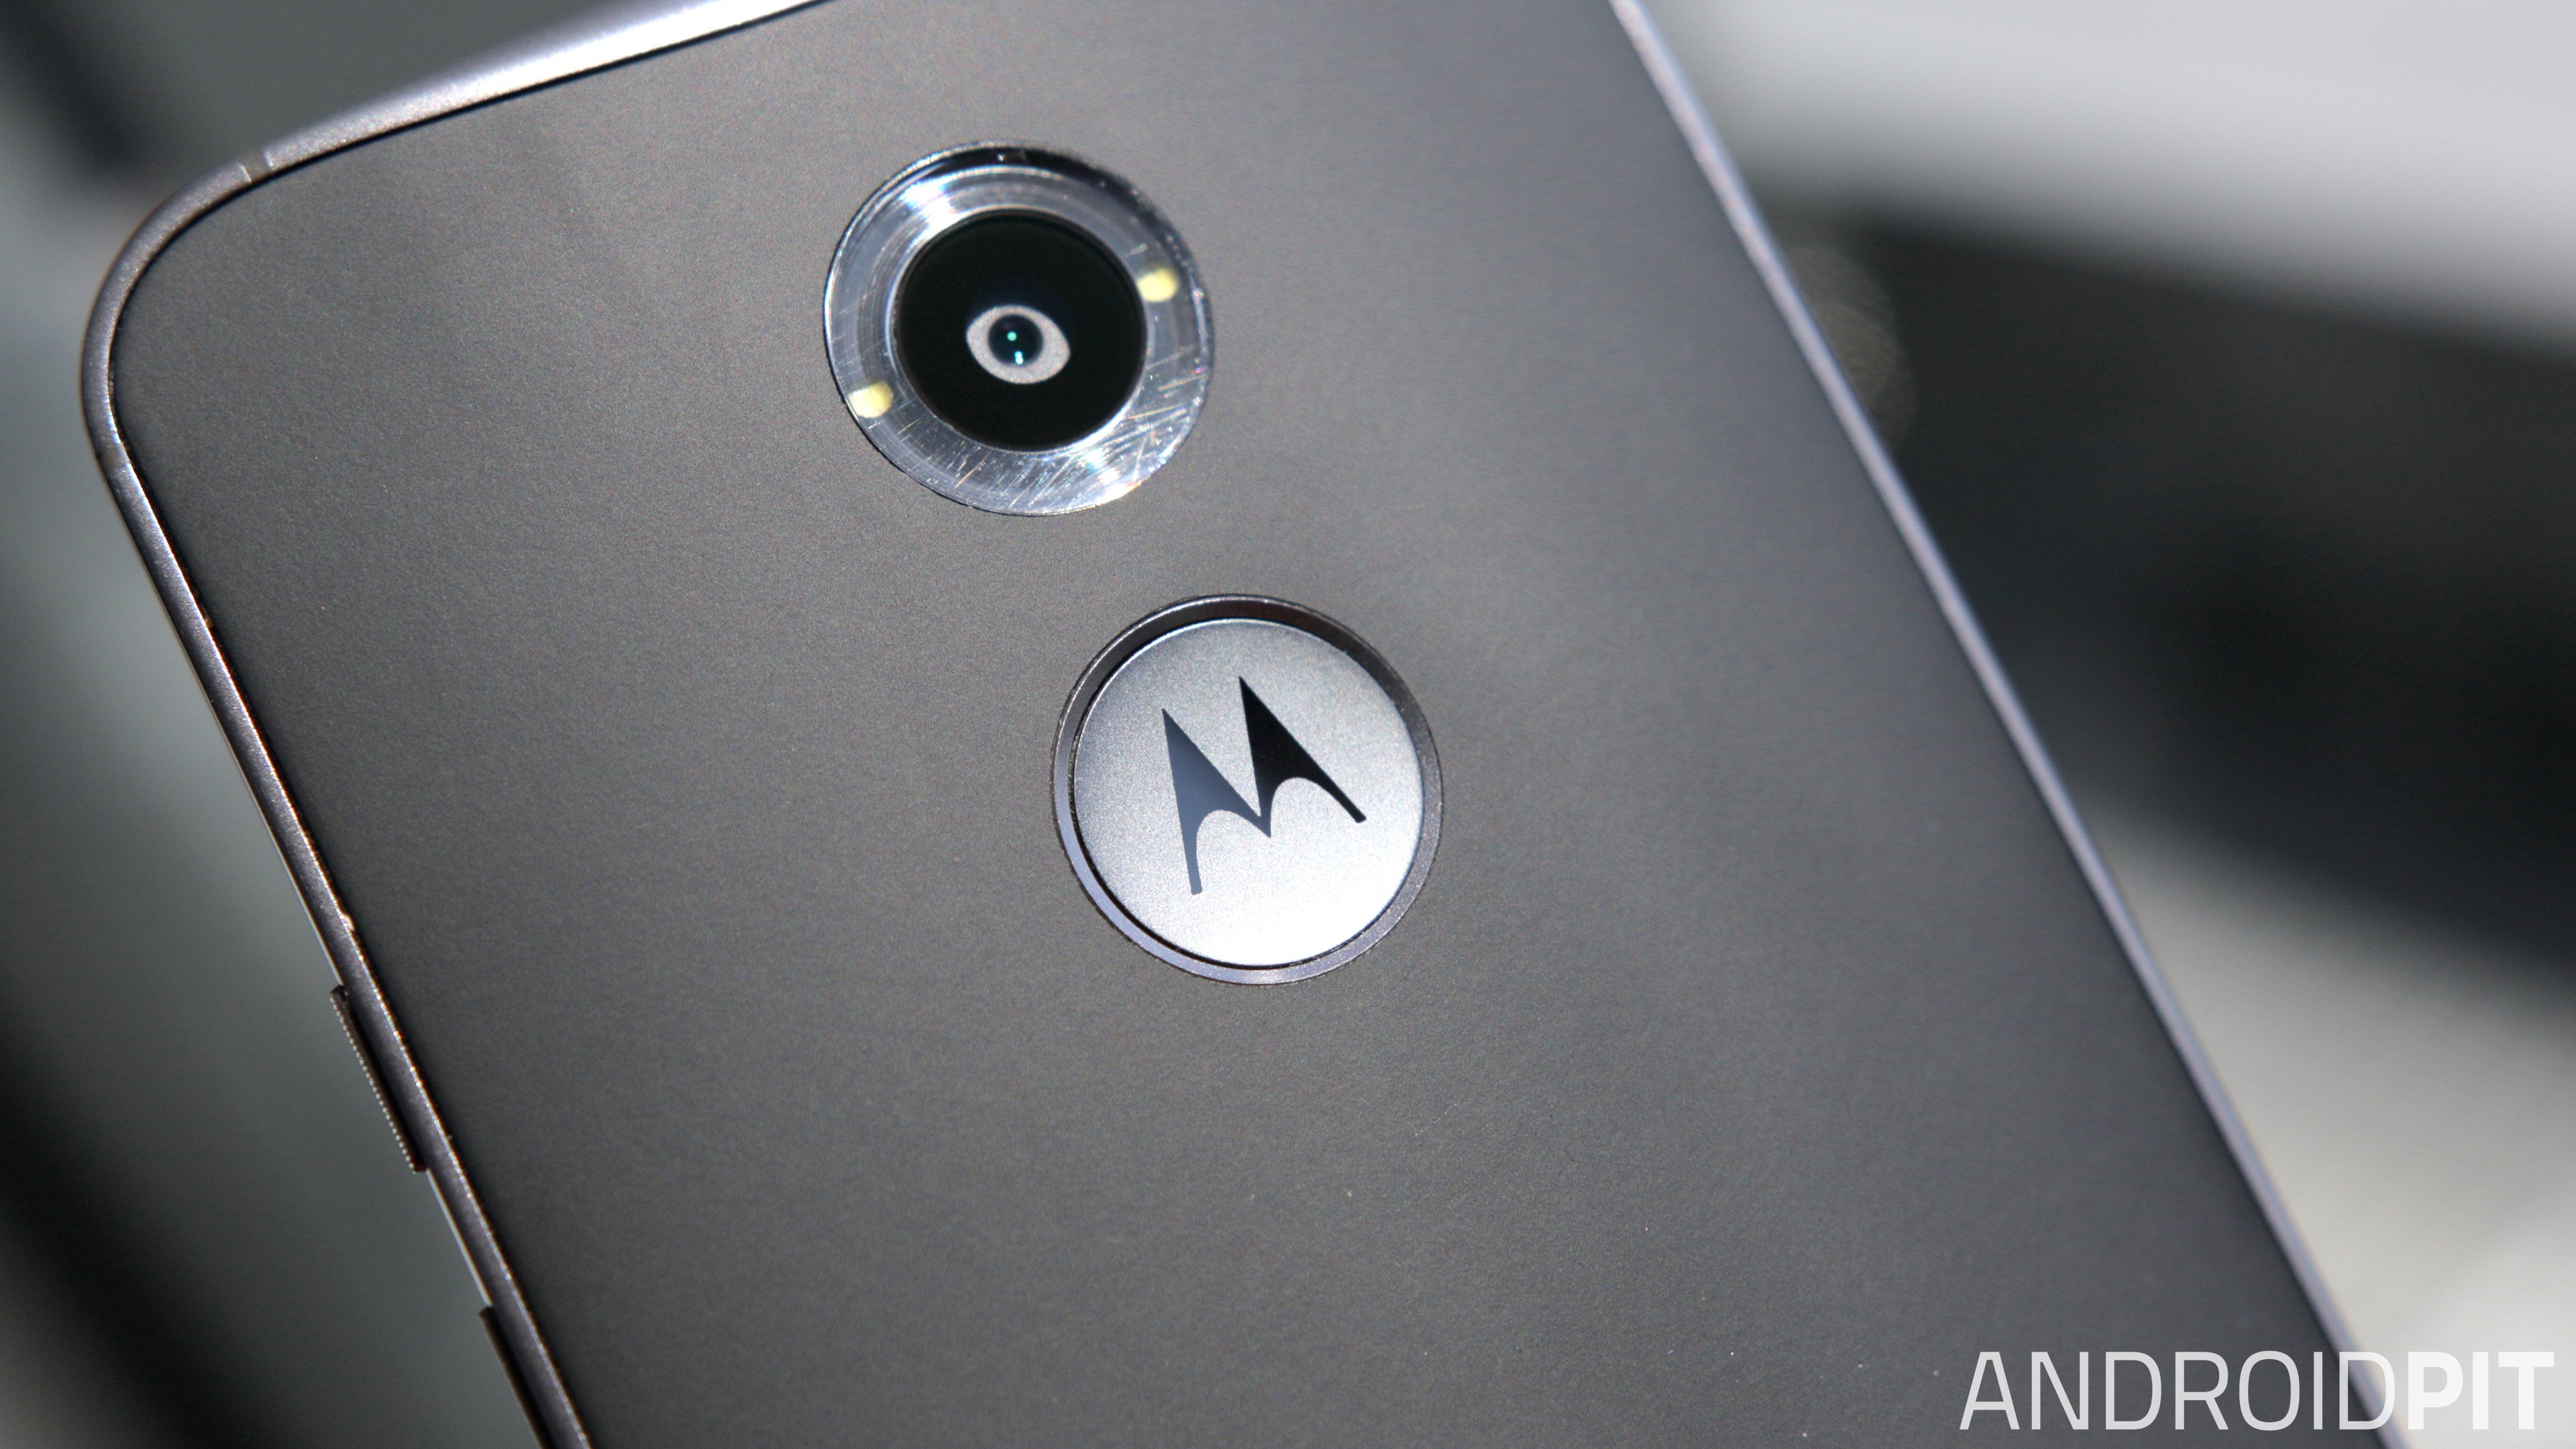 omhelzing Toestand knal Motorola Moto X (2014) review: it's still got it | NextPit